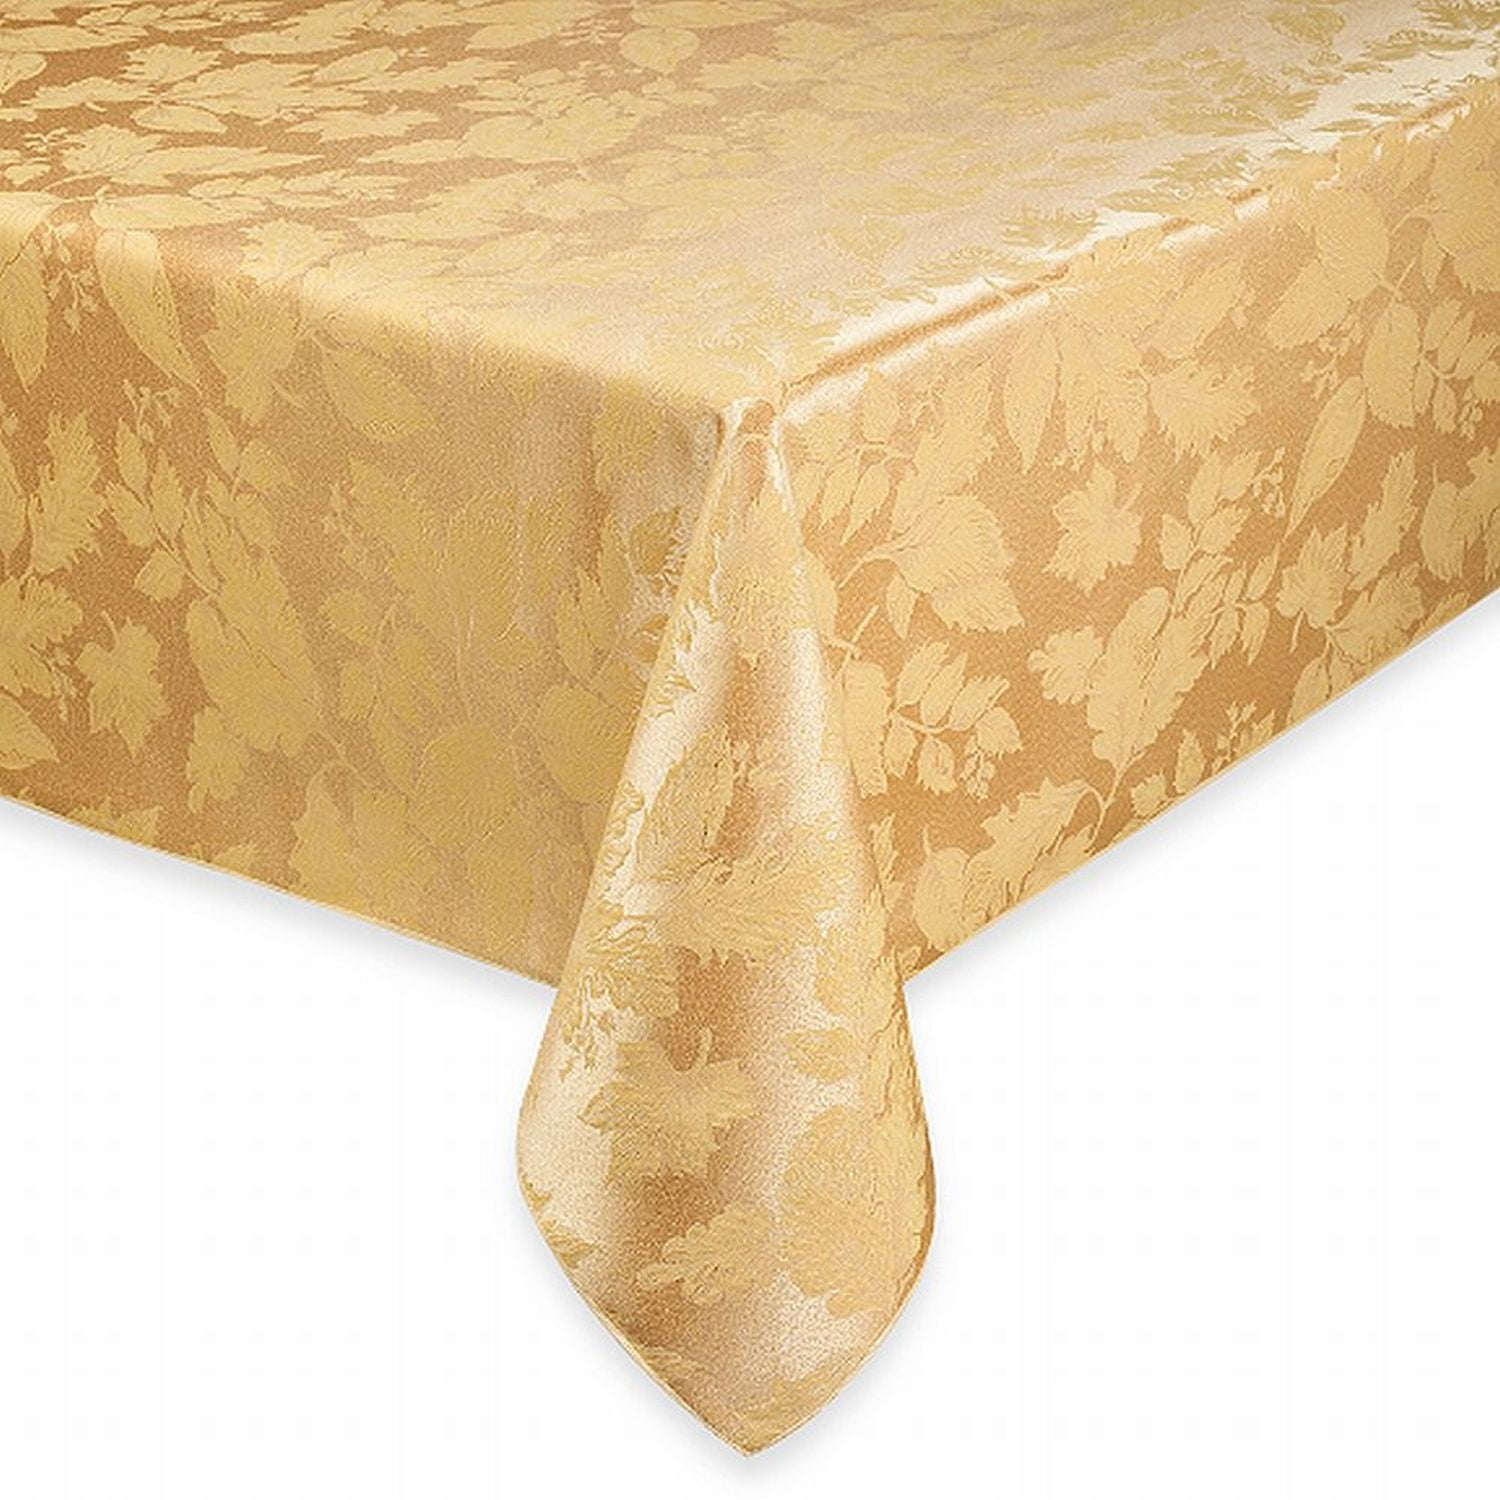 St Nicholas Square Shine Bright Gold Tablecloth 60x102 